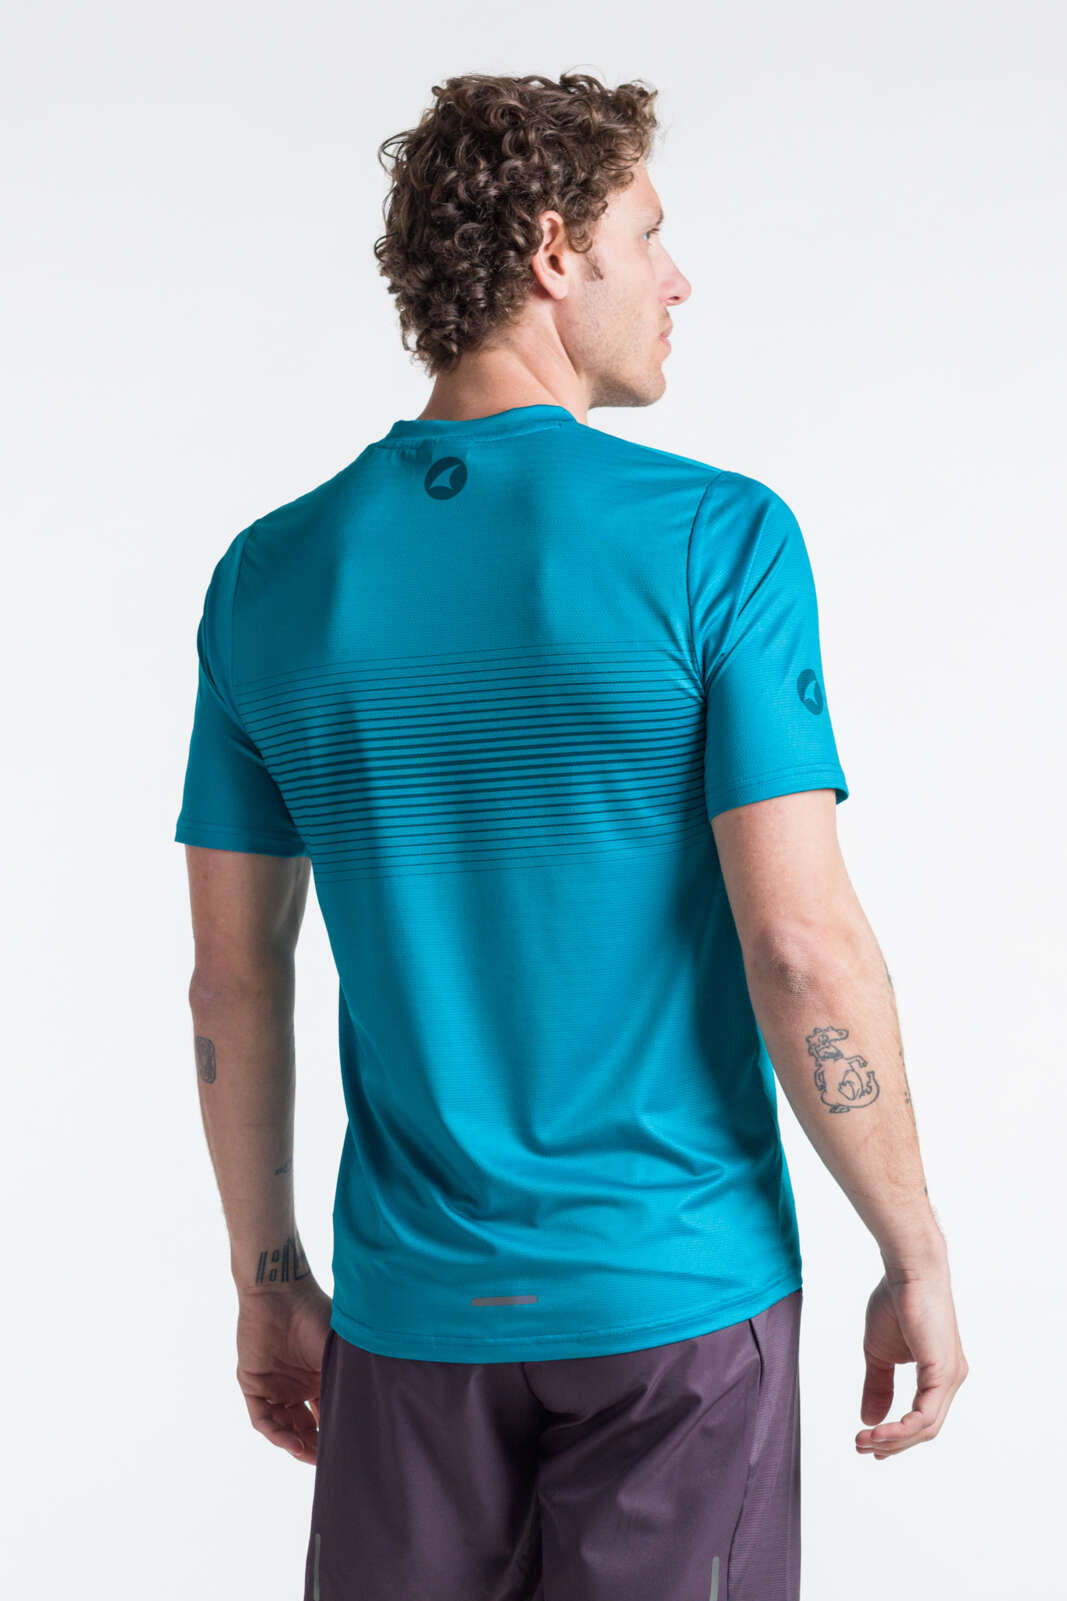 Men's Running Shirt - Back View